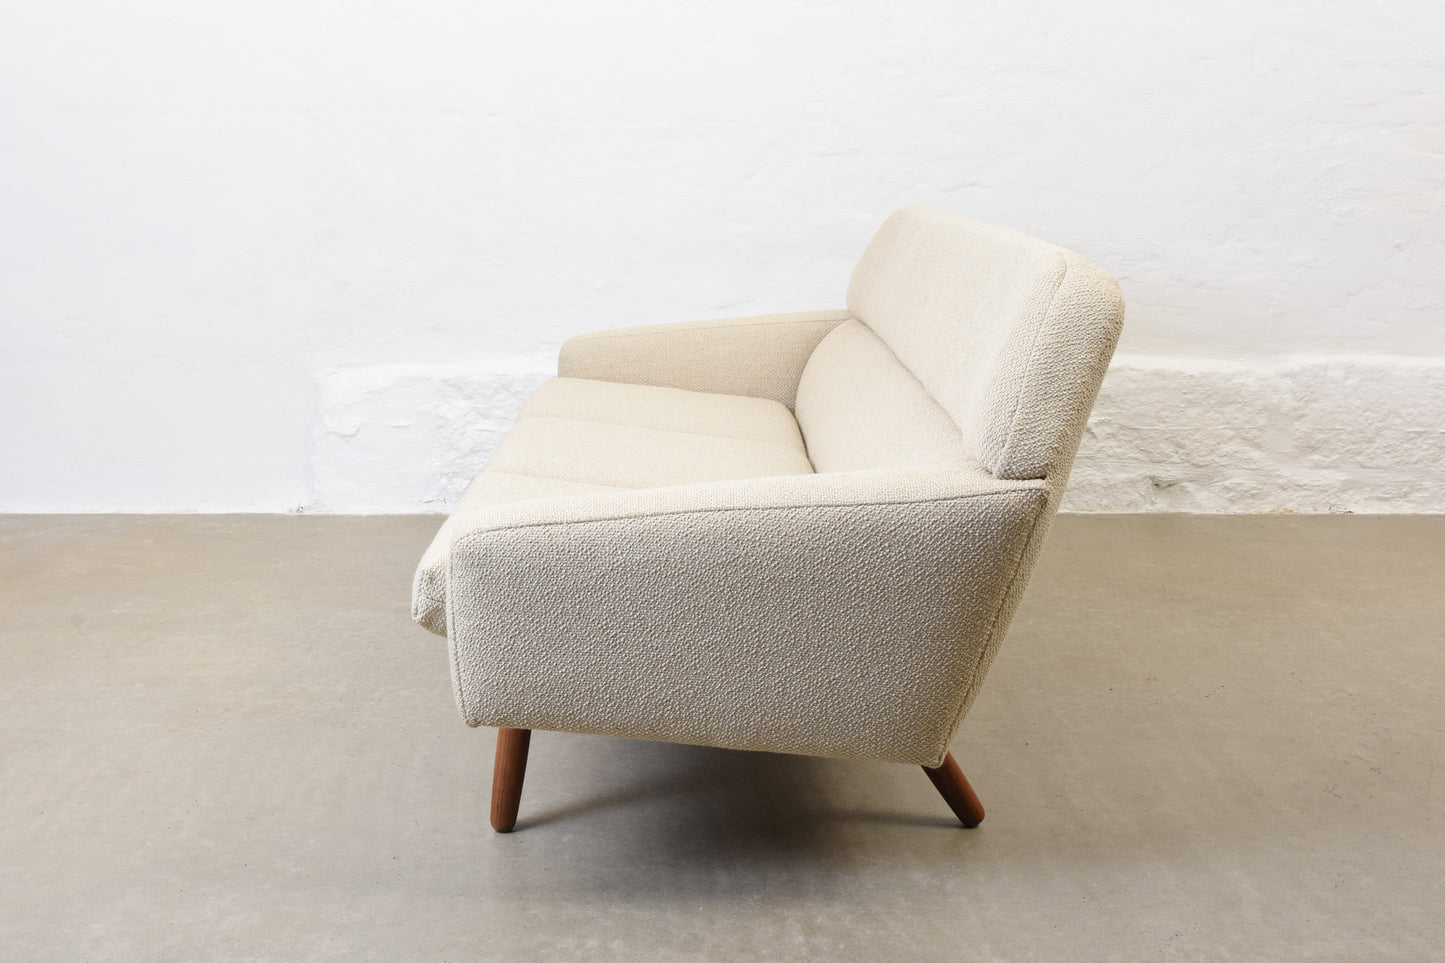 Newly reupholstered: 1960s Danish three seat sofa